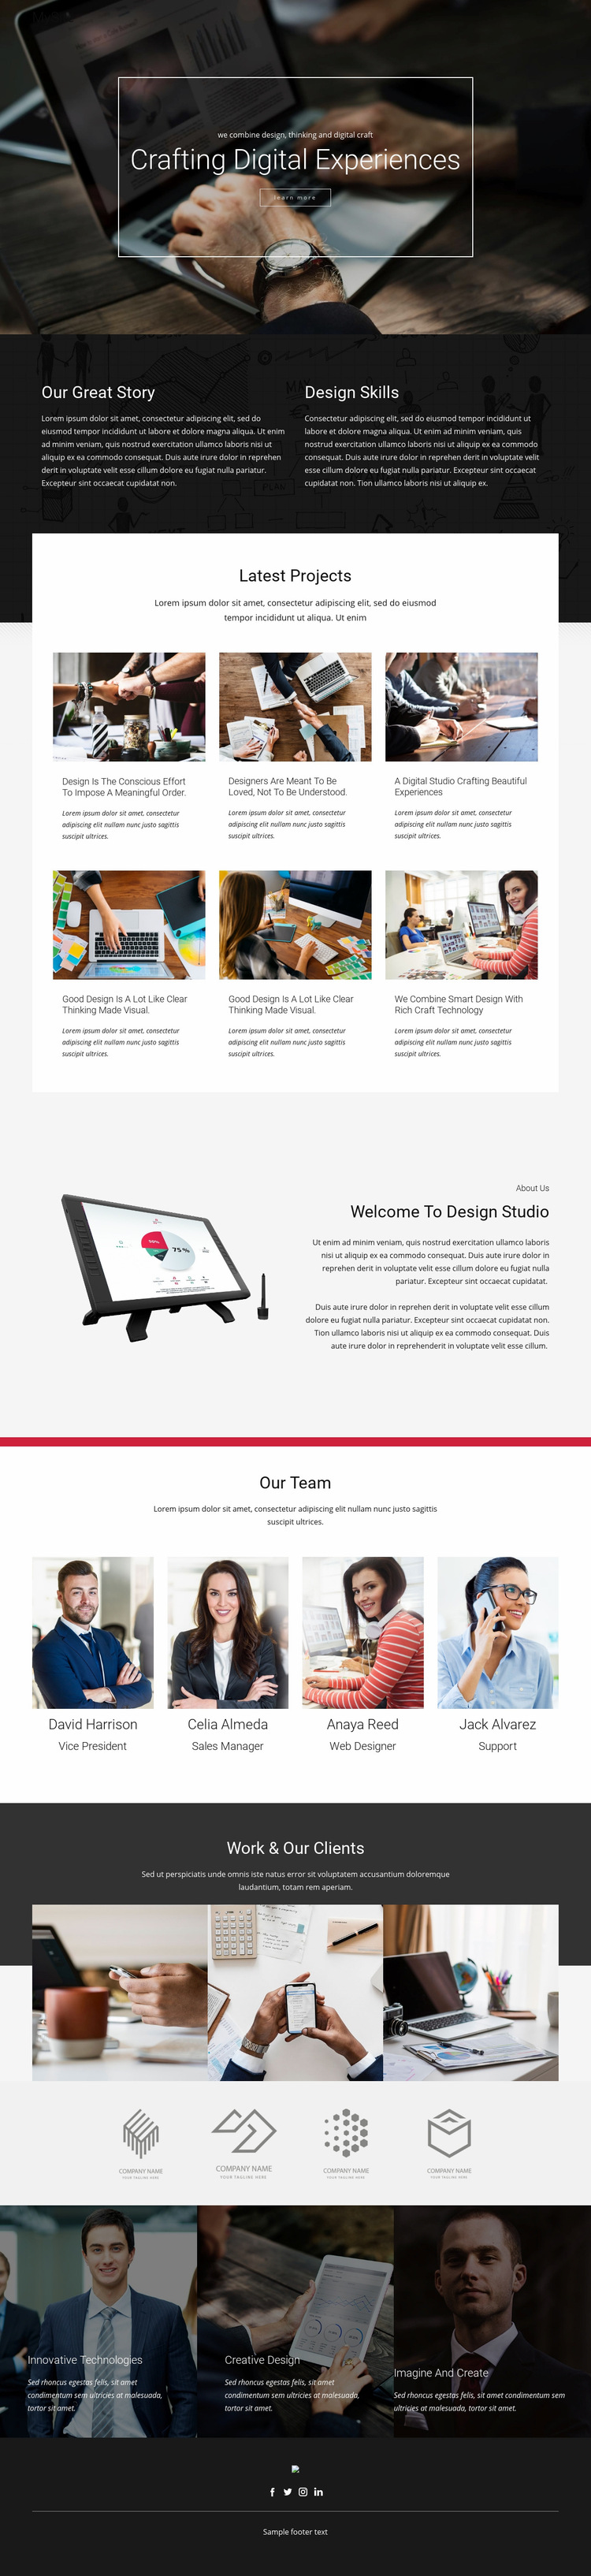 Crafting Digital Design Studio Web Page Design